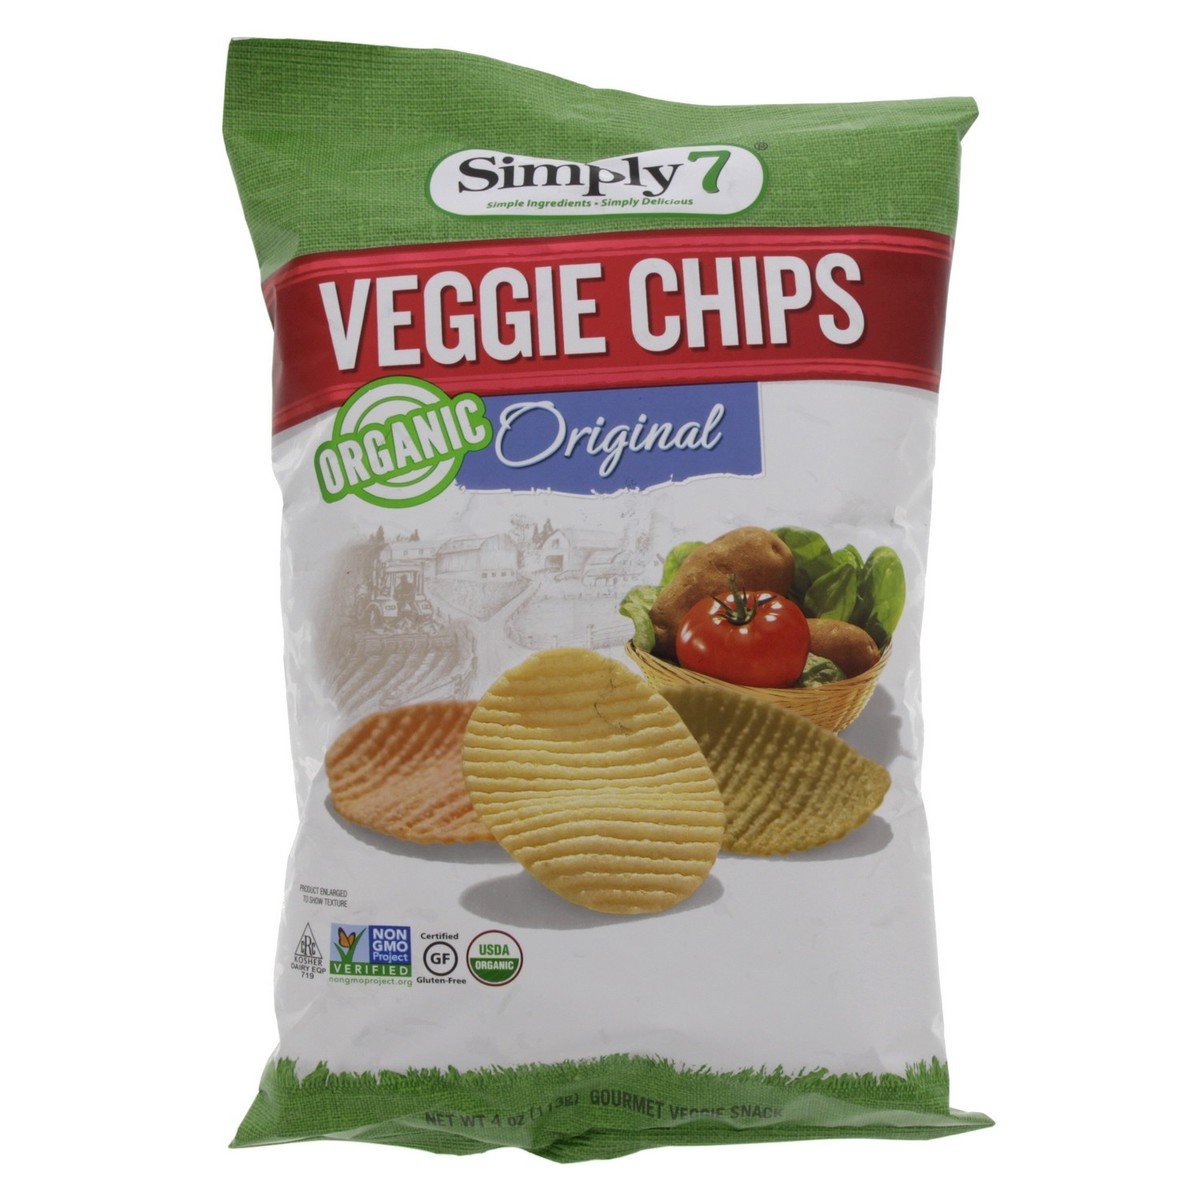 Simply 7 Organic Vegetable Chips Original 113g